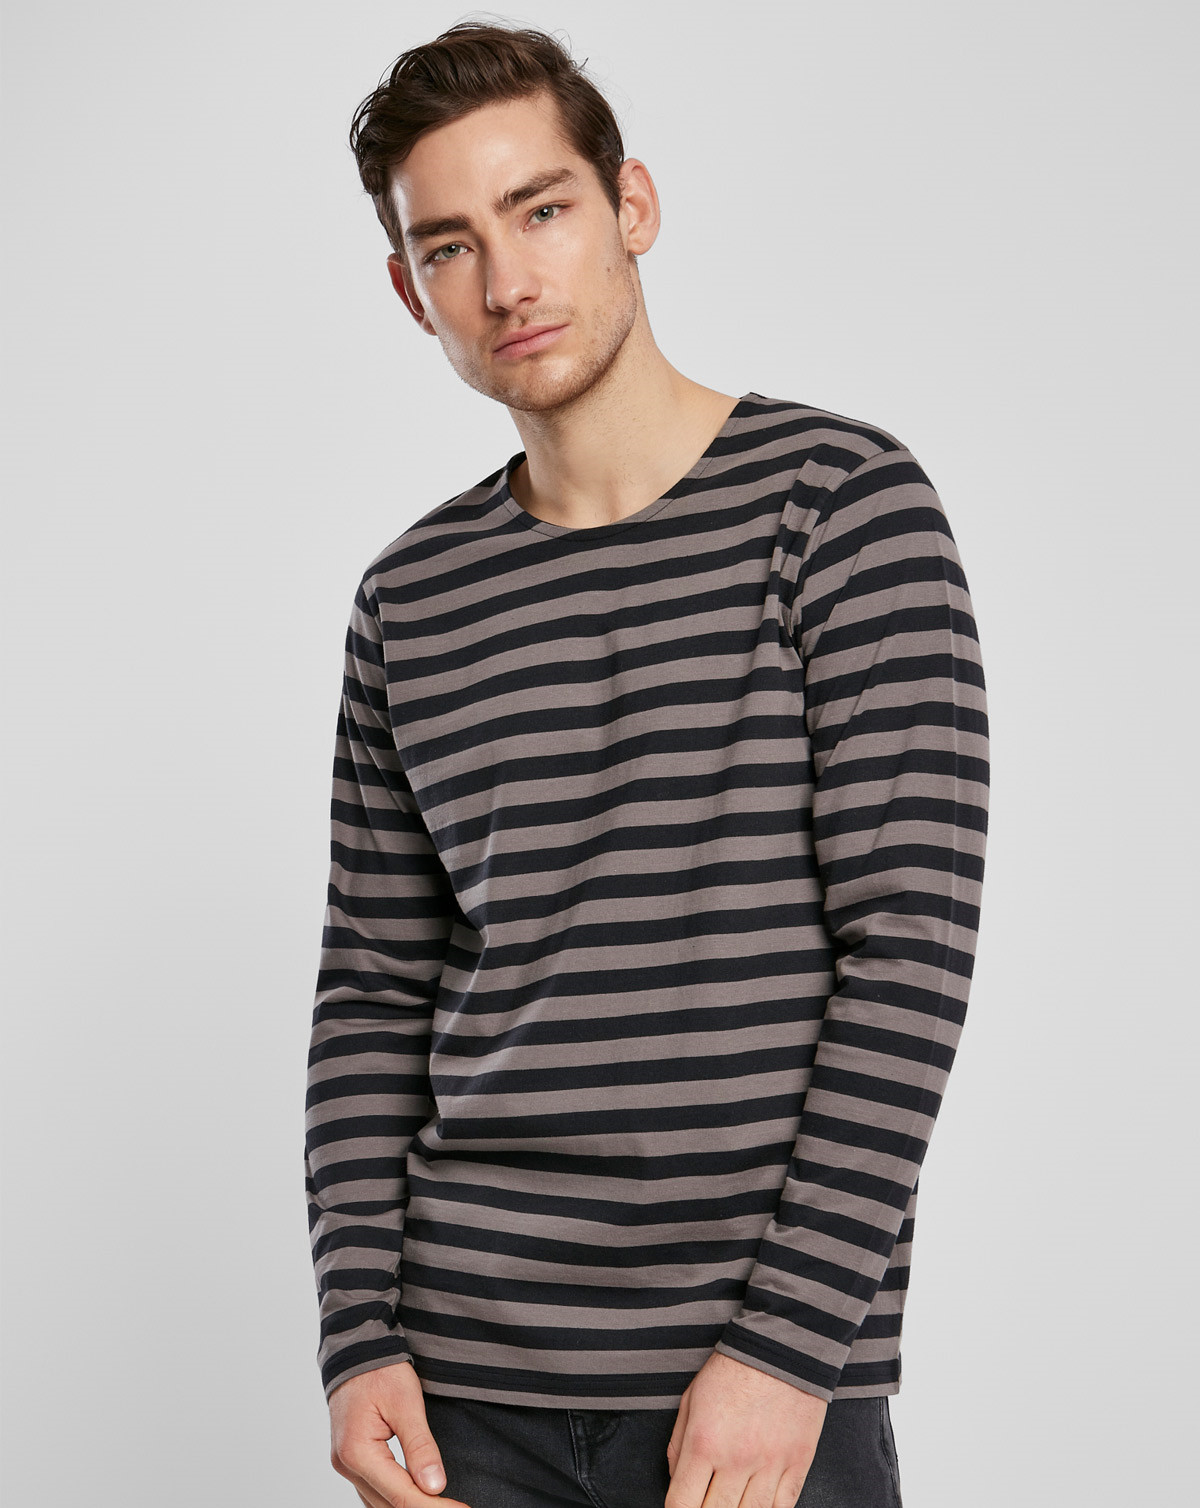 8: Urban Classics Regular StripeLong Sleeve T-Shirt (Asphalt / Black, 2XL)